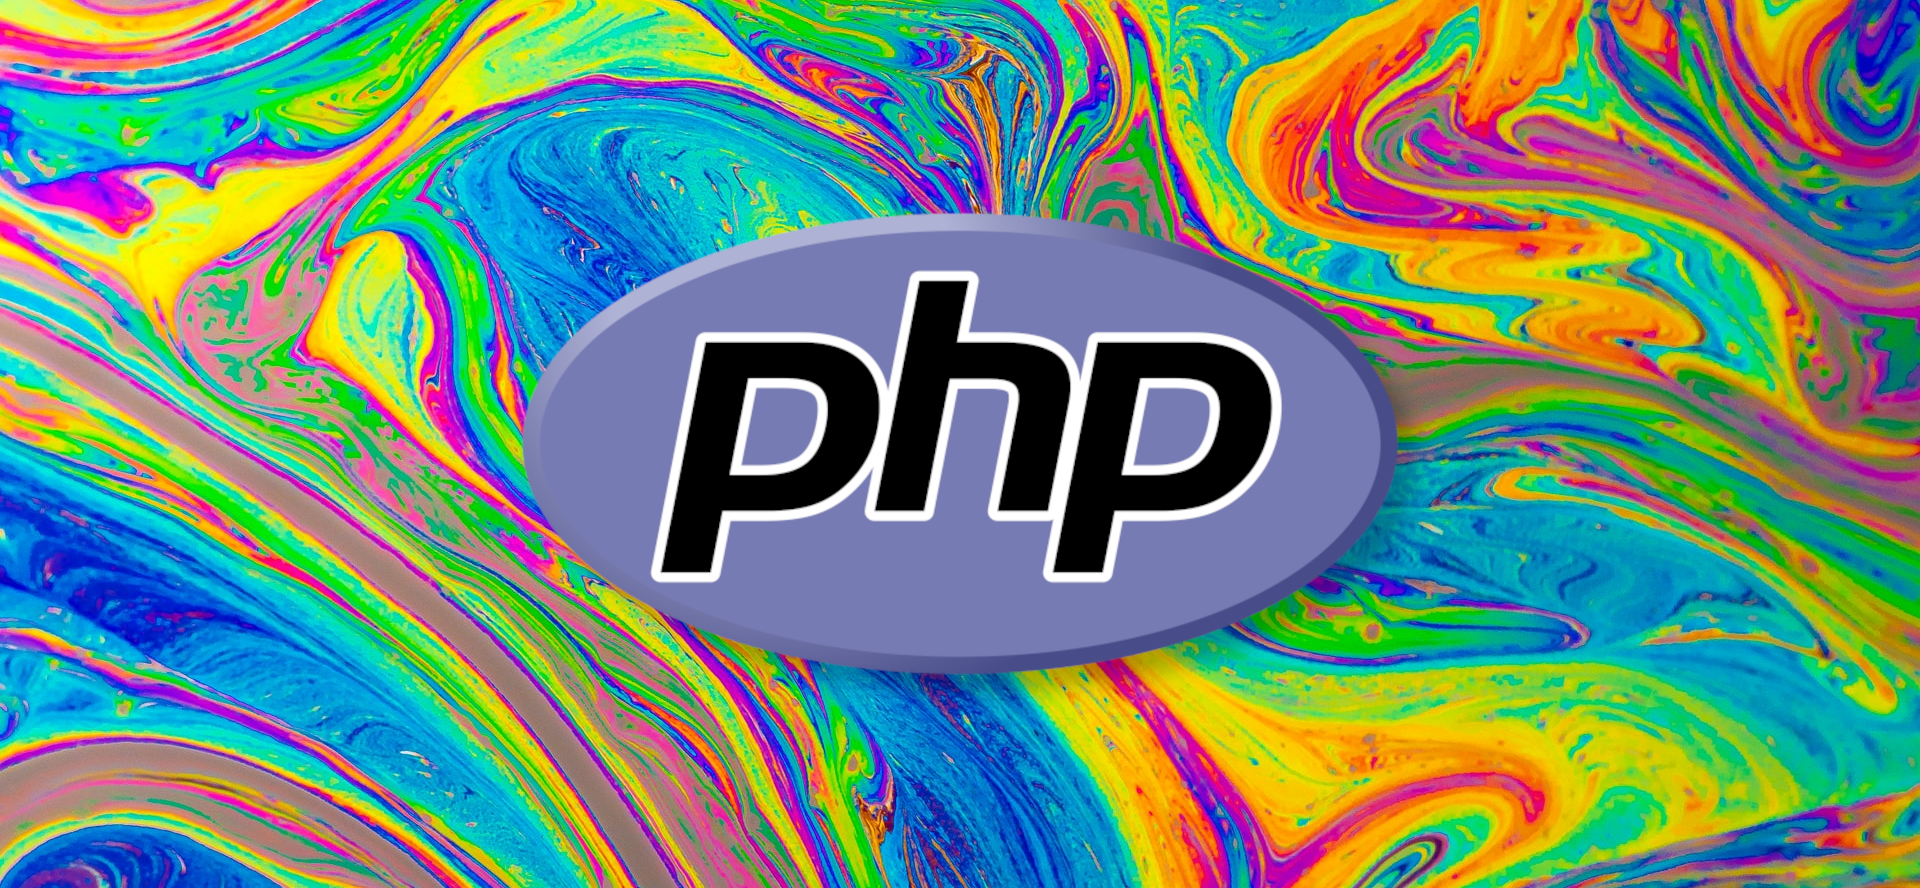 PHP Usage